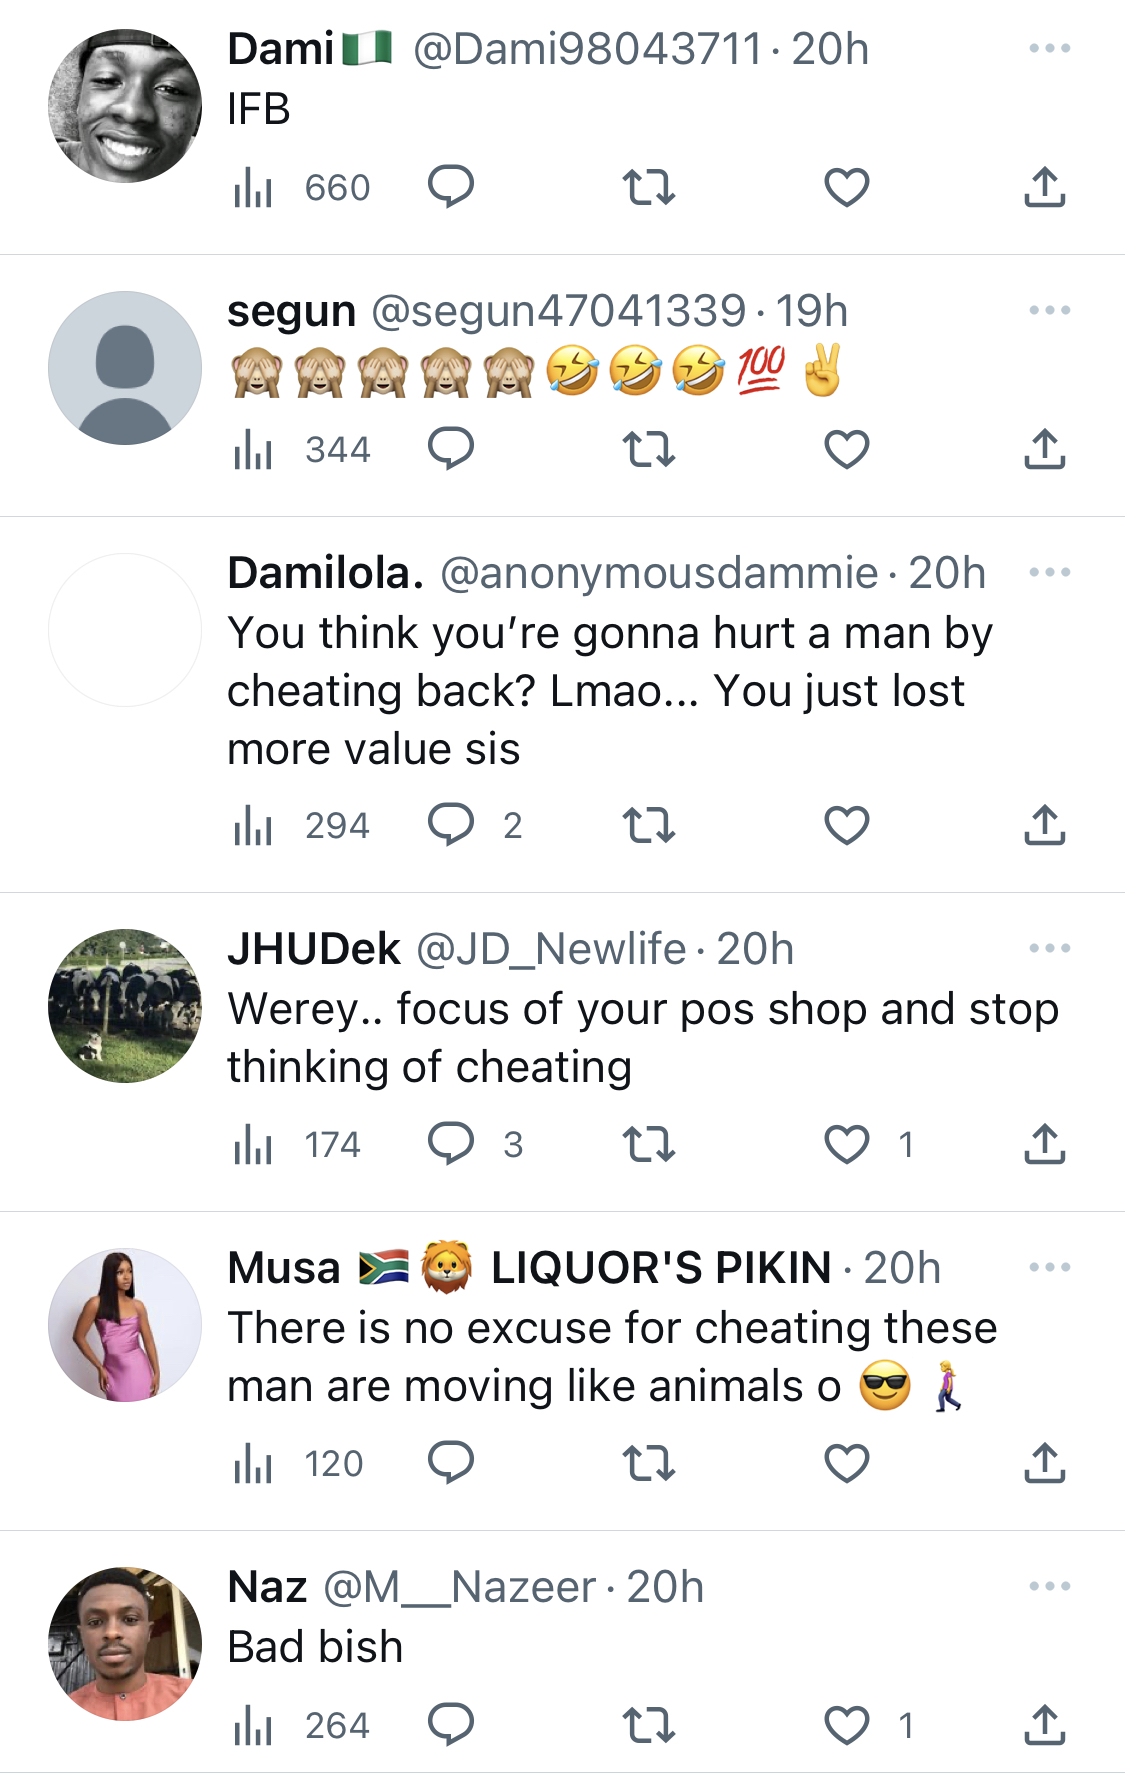 I don’t blame men for cheating but I’ll cheat back - BBNaija Tolanibaj warns